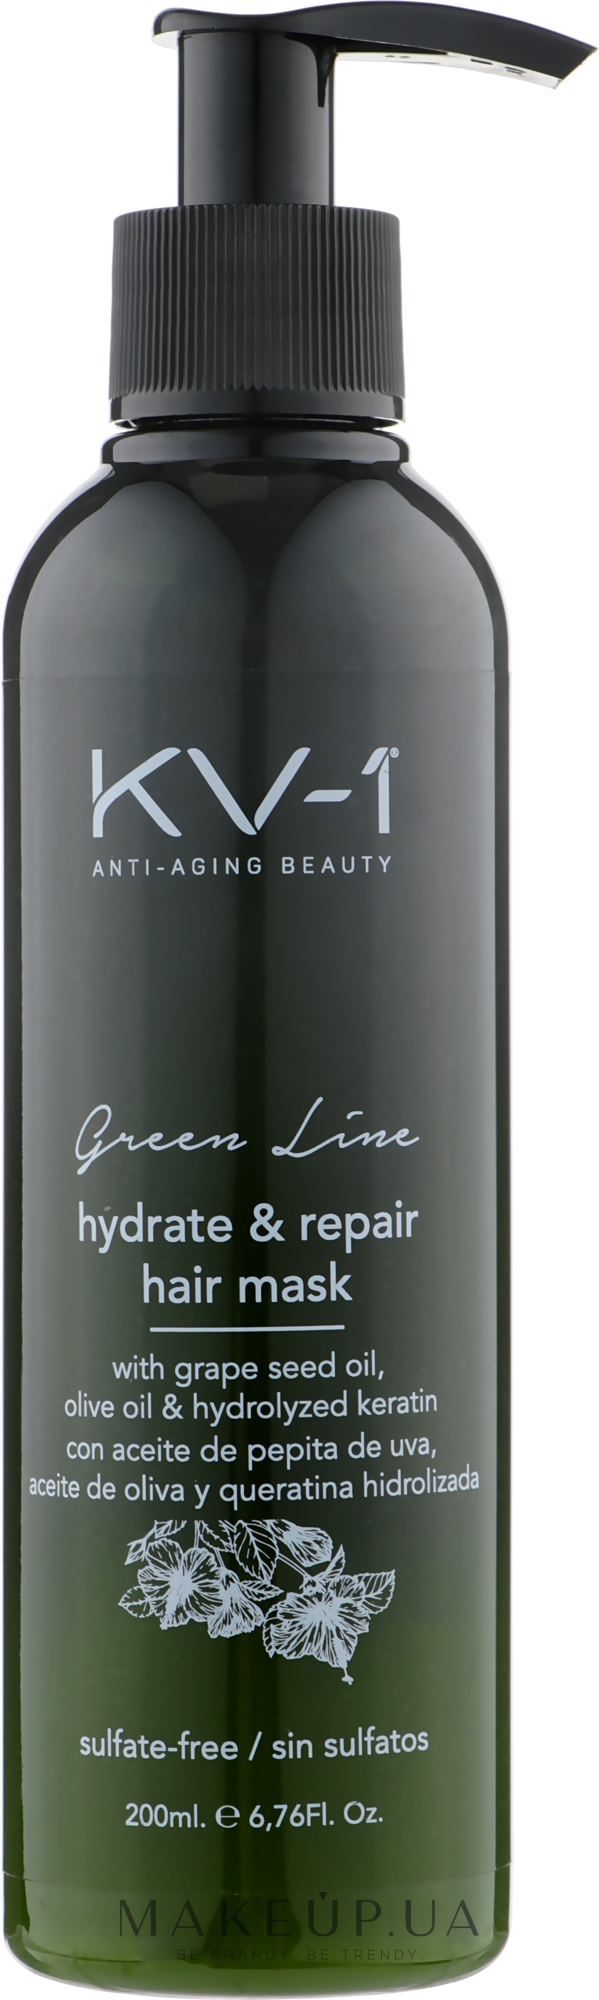 Маска-кондиционер для увлажнения и питания волос - KV-1 Green Line Hydrate & Repair Hair Mask — фото 200ml